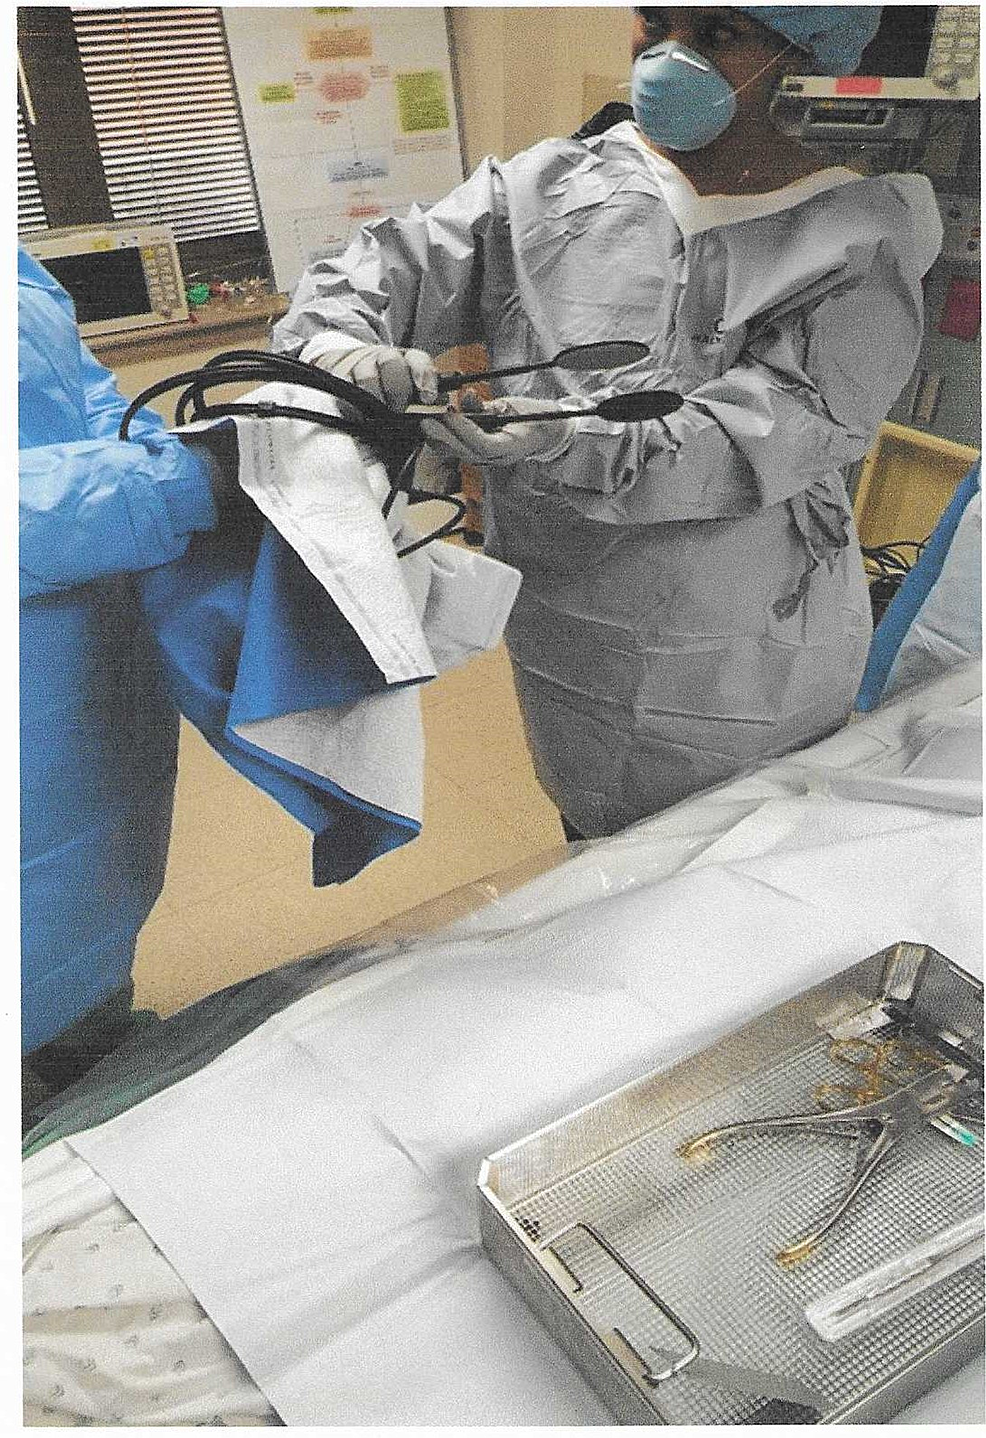 Circulating-nurse-handing-over-sterile-equipment-to-the-surgeon.